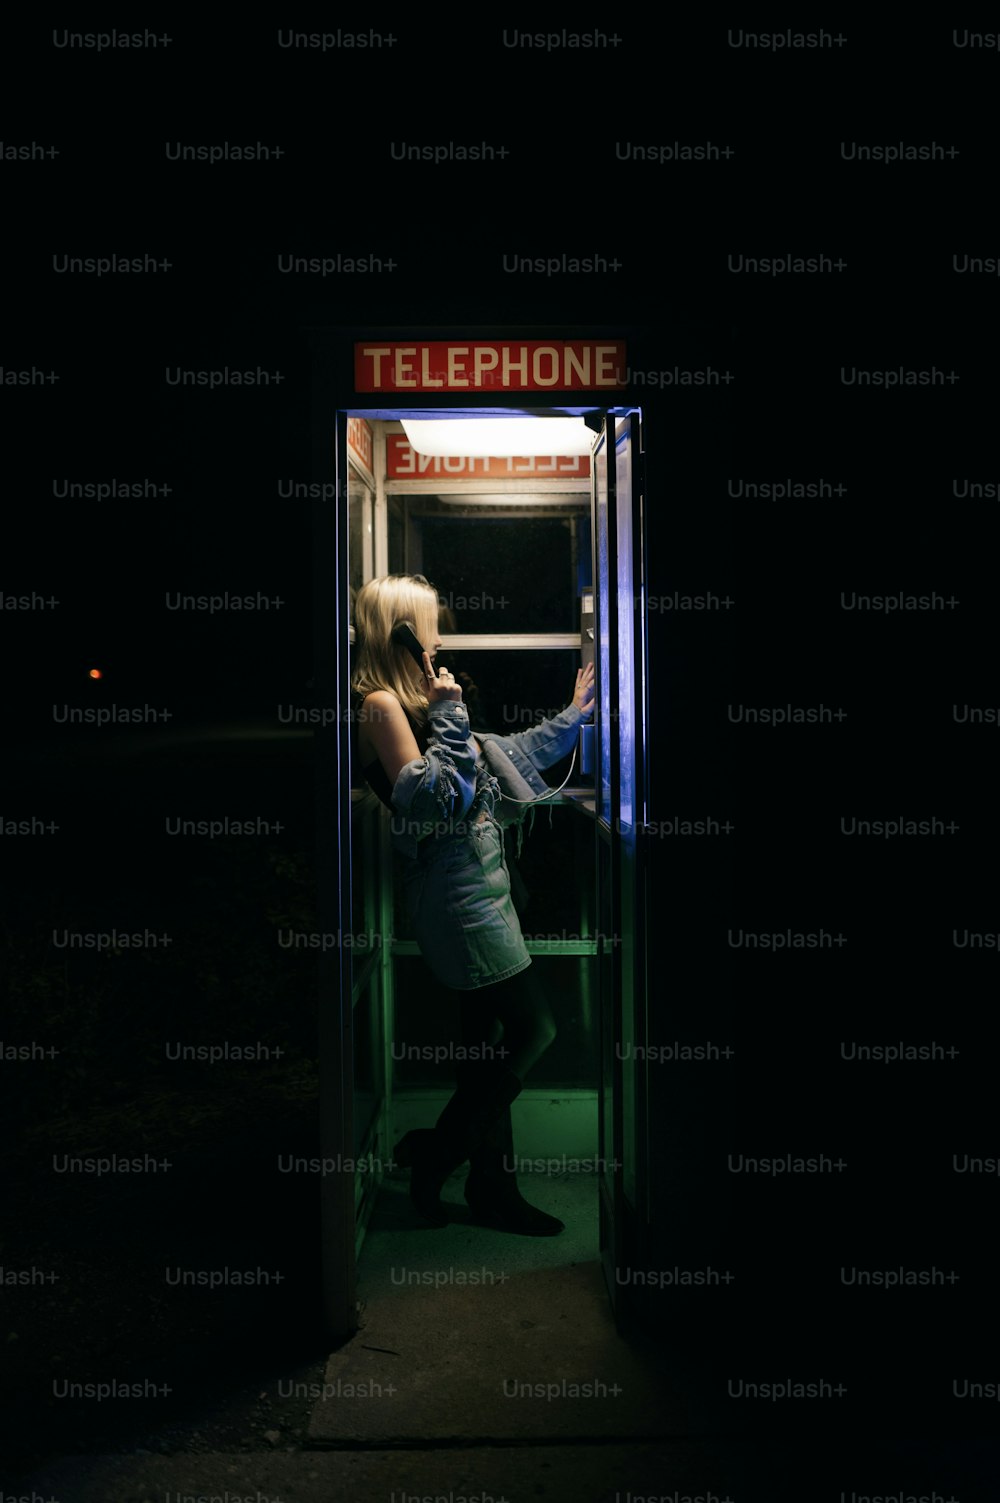 Una mujer parada frente a una cabina telefónica